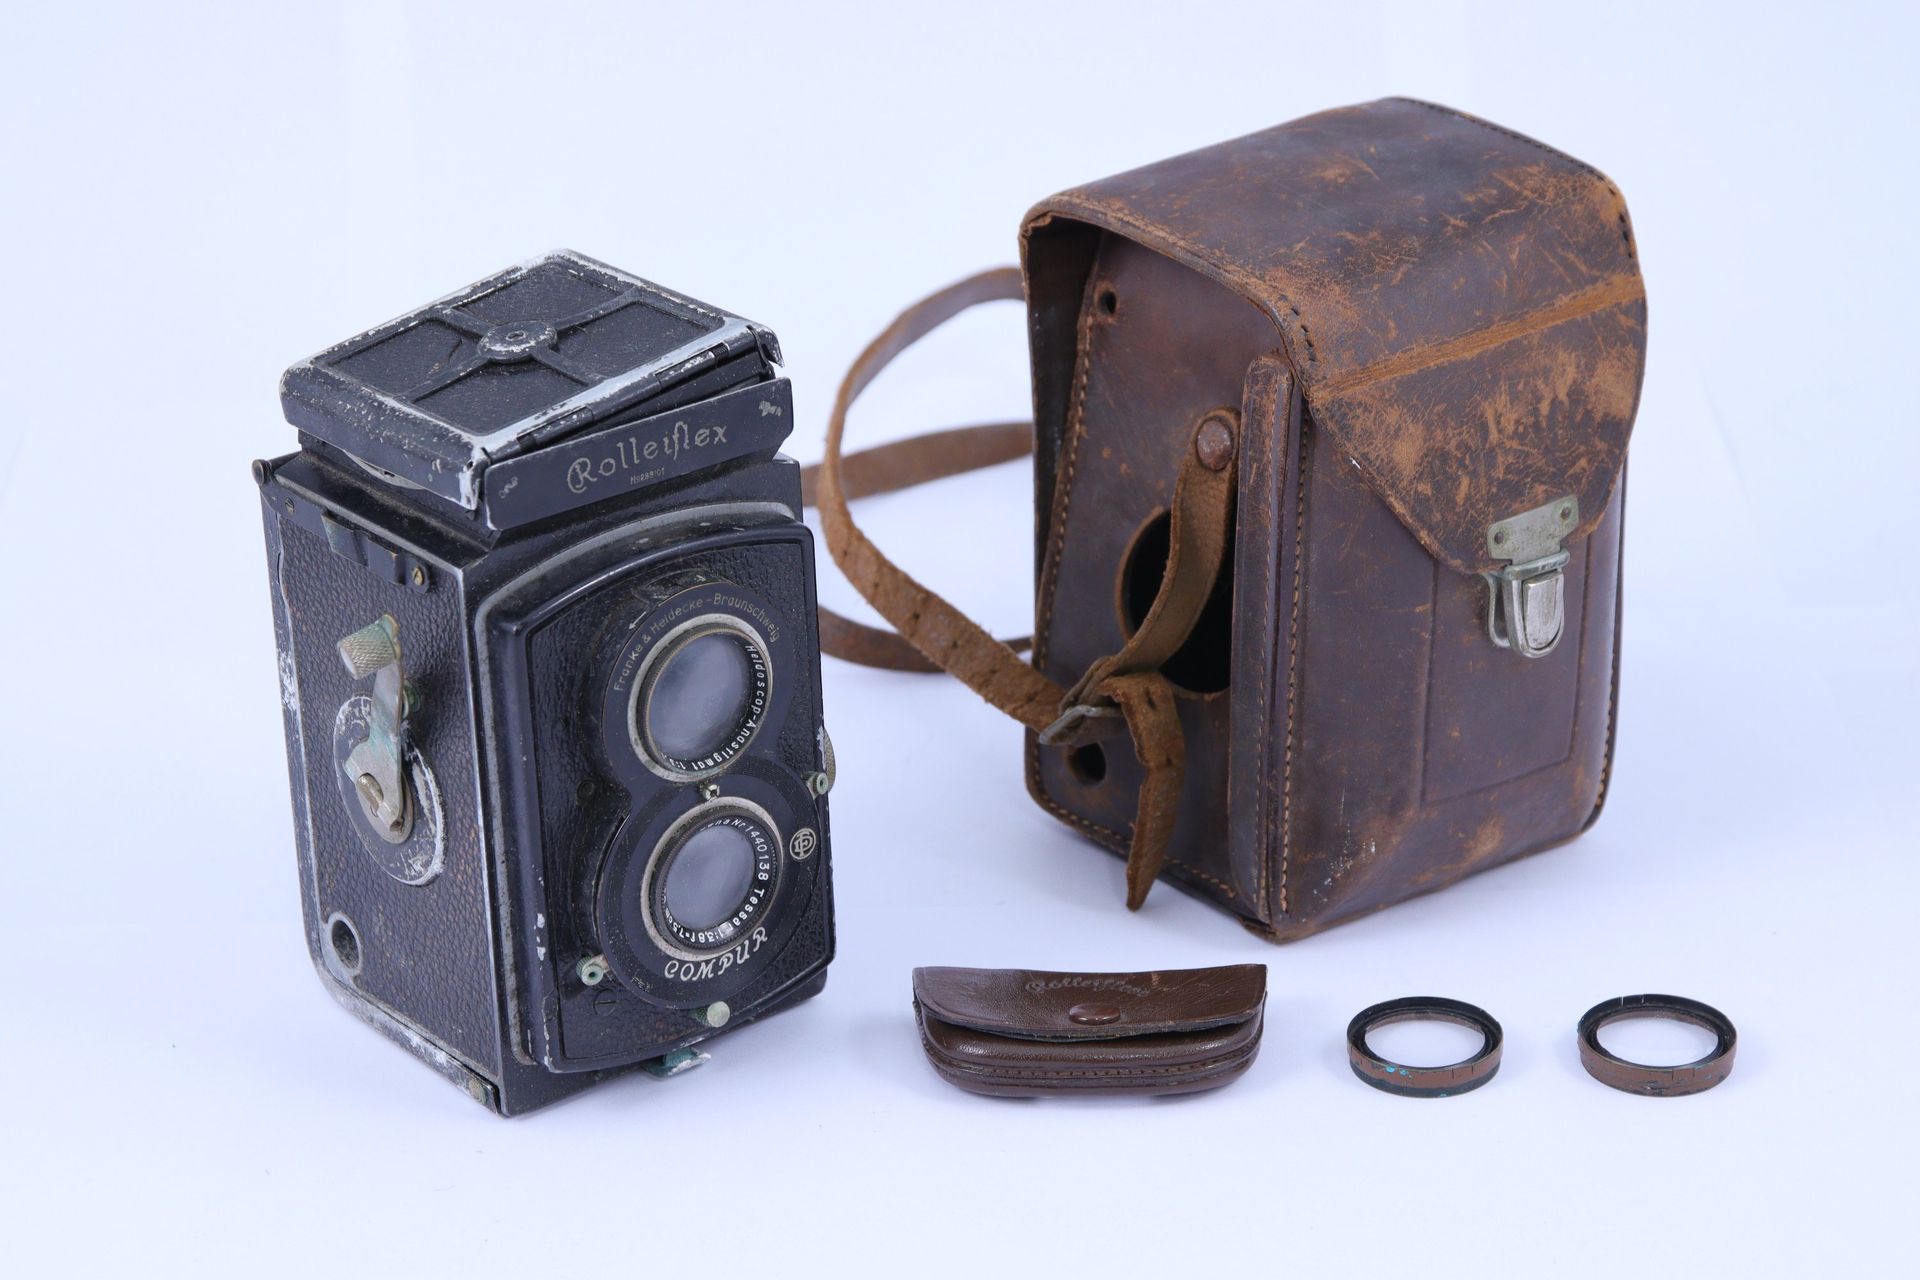 Null 设备
出处：罗杰家族收藏

1.Rolleiflex - Franke & Heidecke，约 1932 年
相机（编号288101），配有Held&hellip;